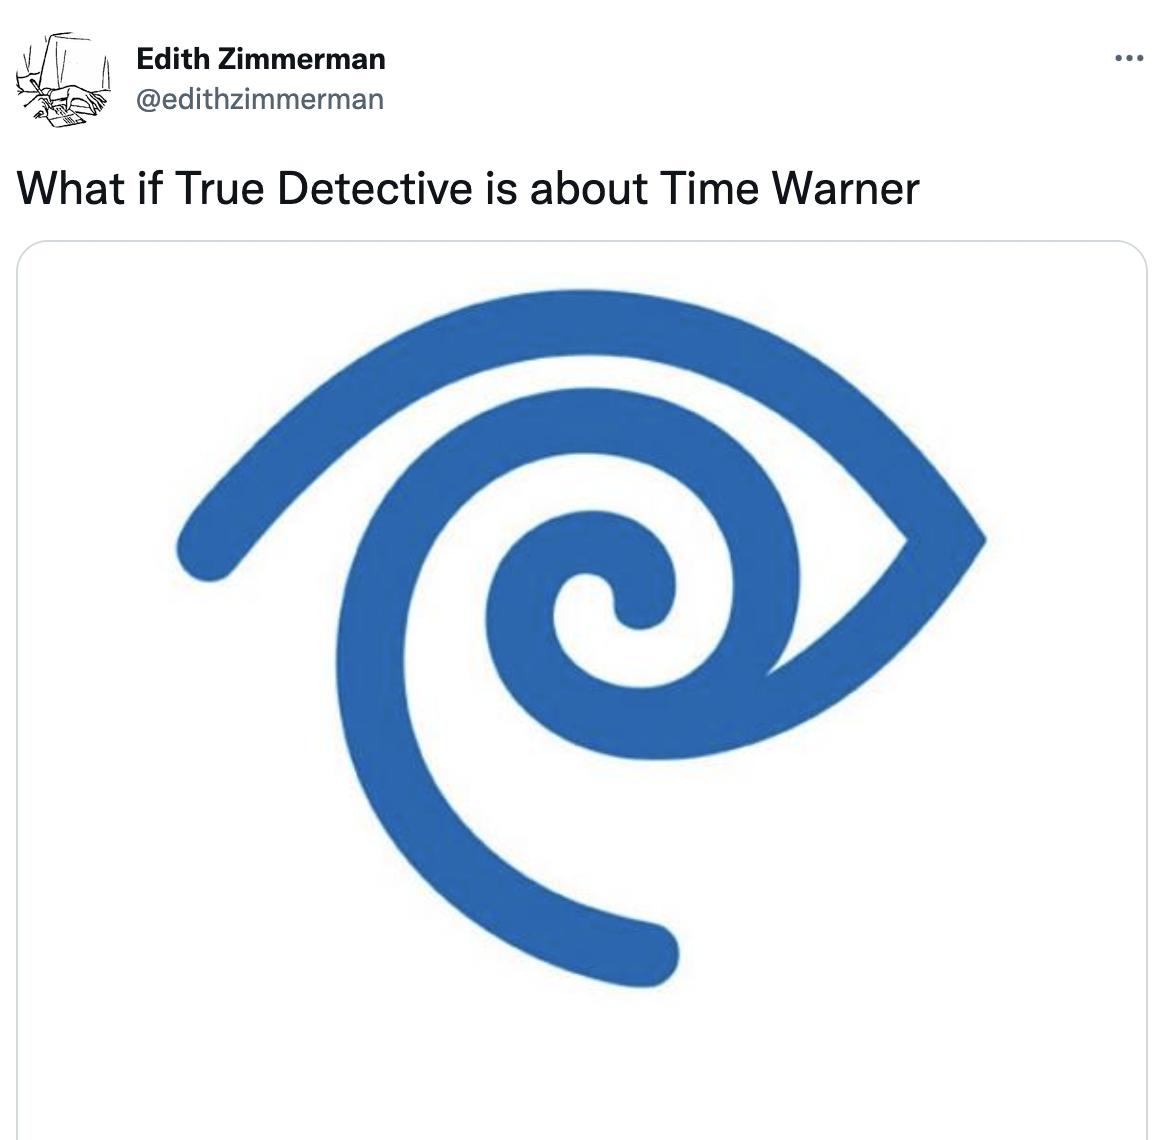 True Detective show memes - time warner - Edith Zimmerman What if True Detective is about Time Warner